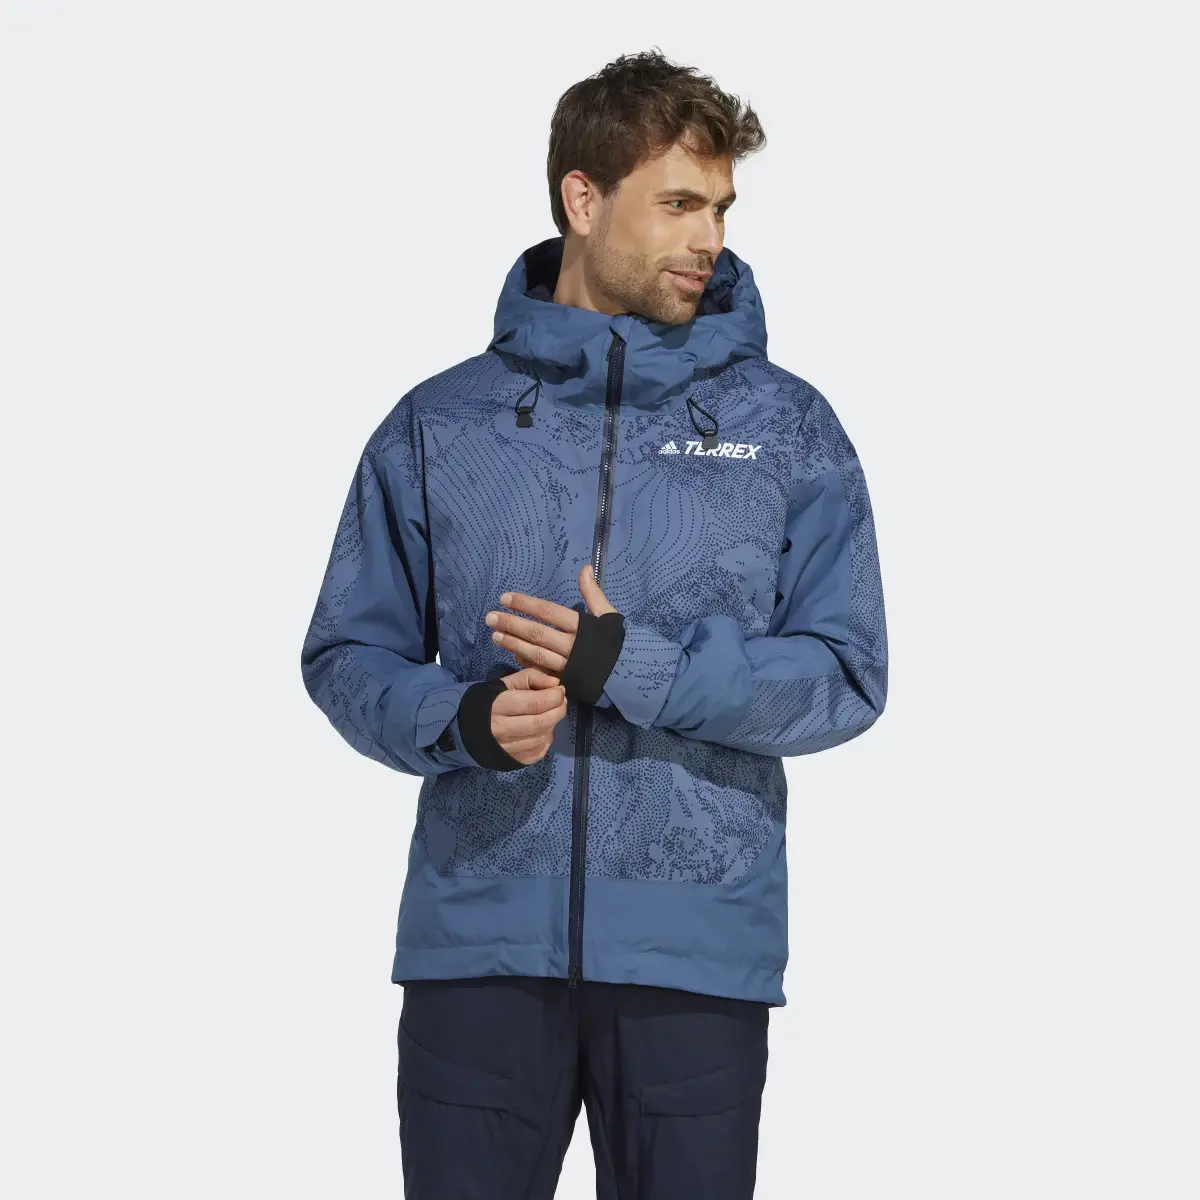 Adidas Terrex 2-Layer Insulated Snow Graphic Jacket. 2